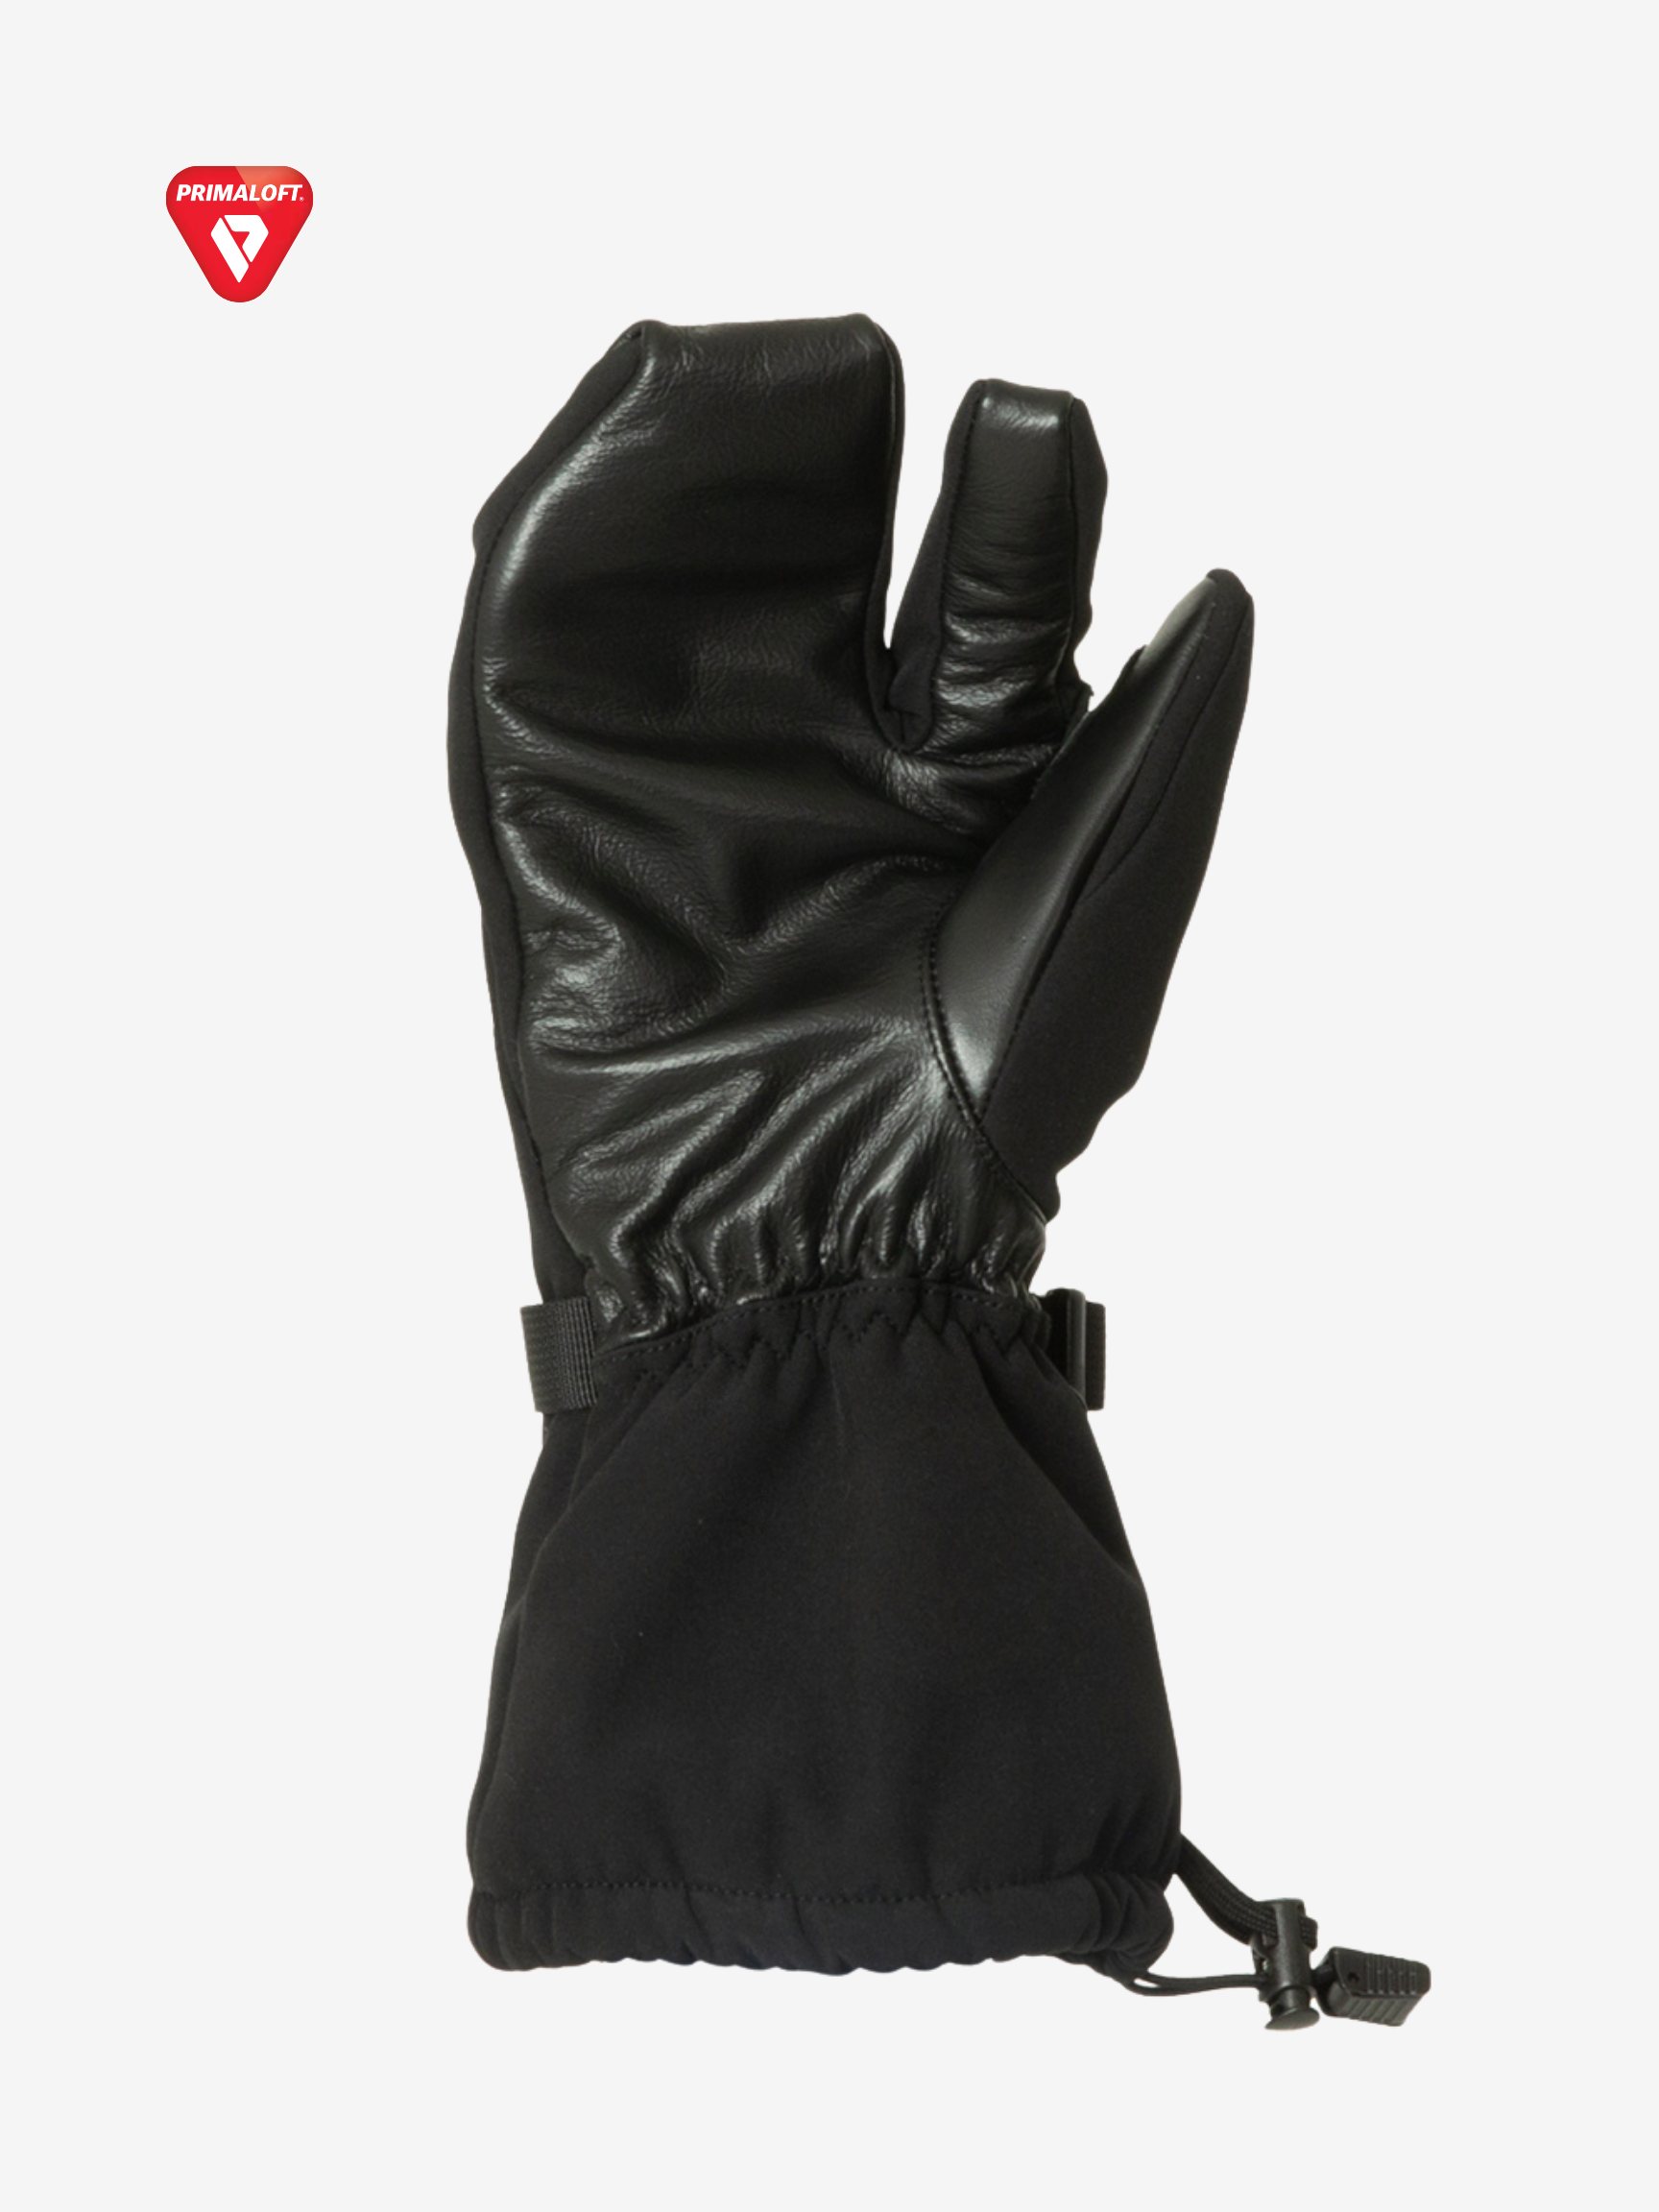 CS-ONE Series™ Shocker Glove